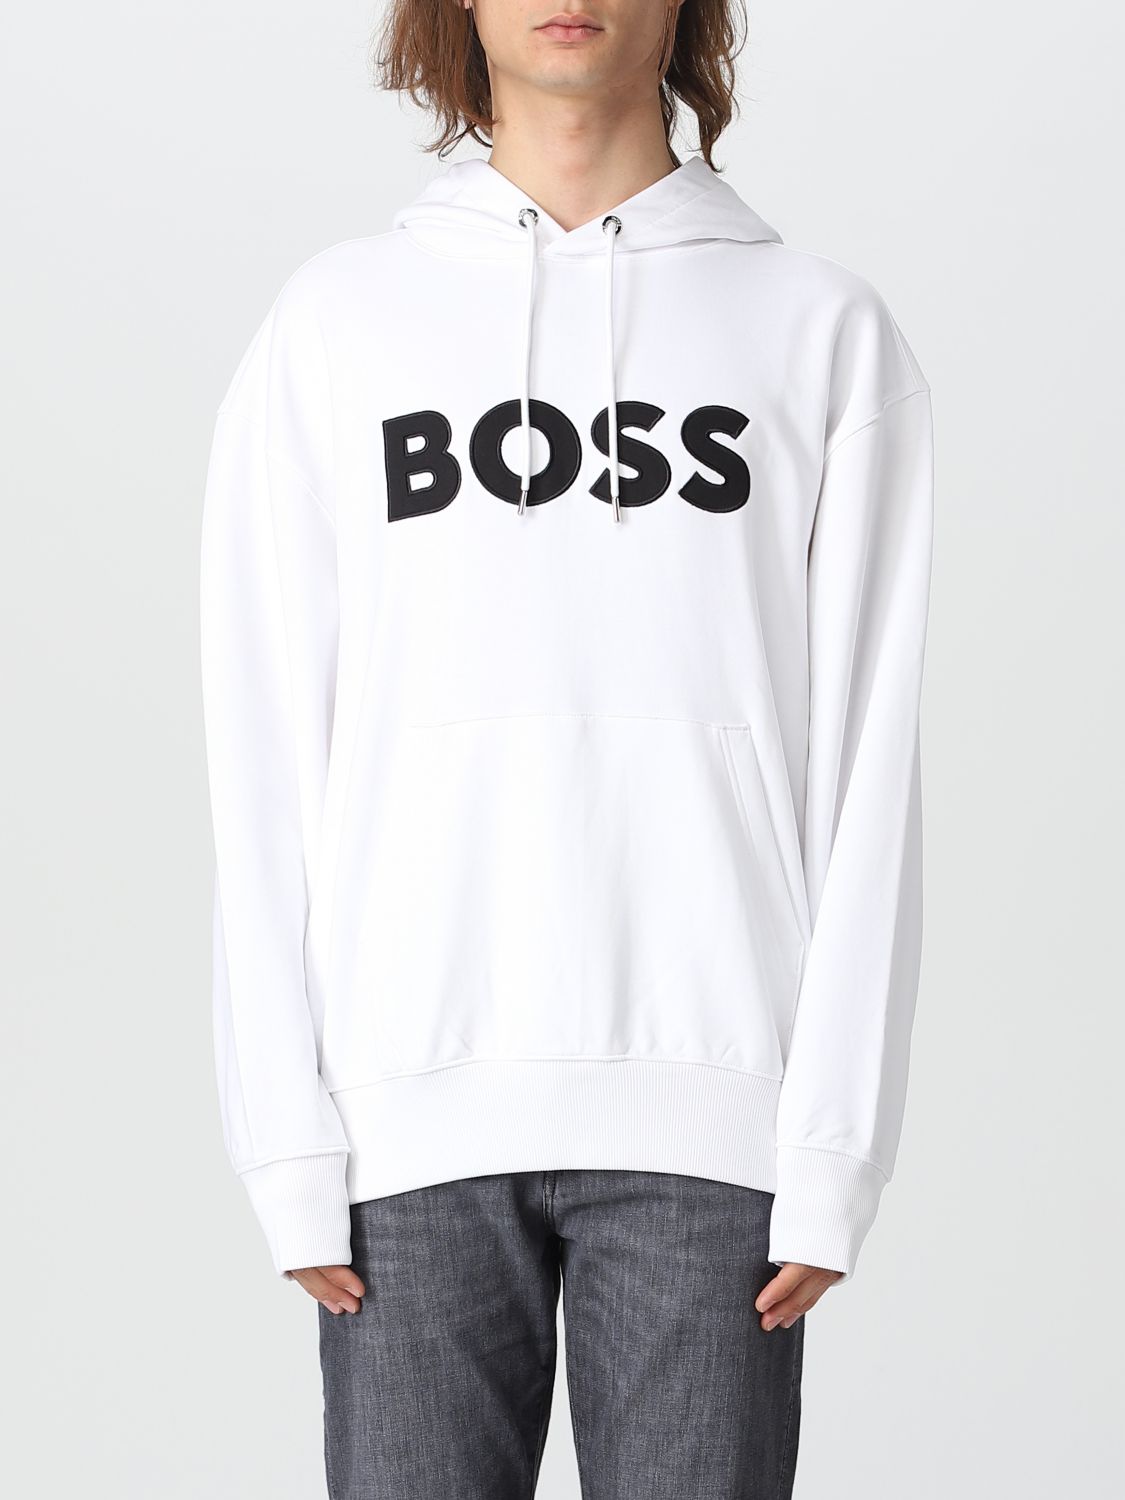 Ekspedient At søge tilflugt aflange BOSS: sweatshirt for man - White | Boss sweatshirt 50486243 online on  GIGLIO.COM